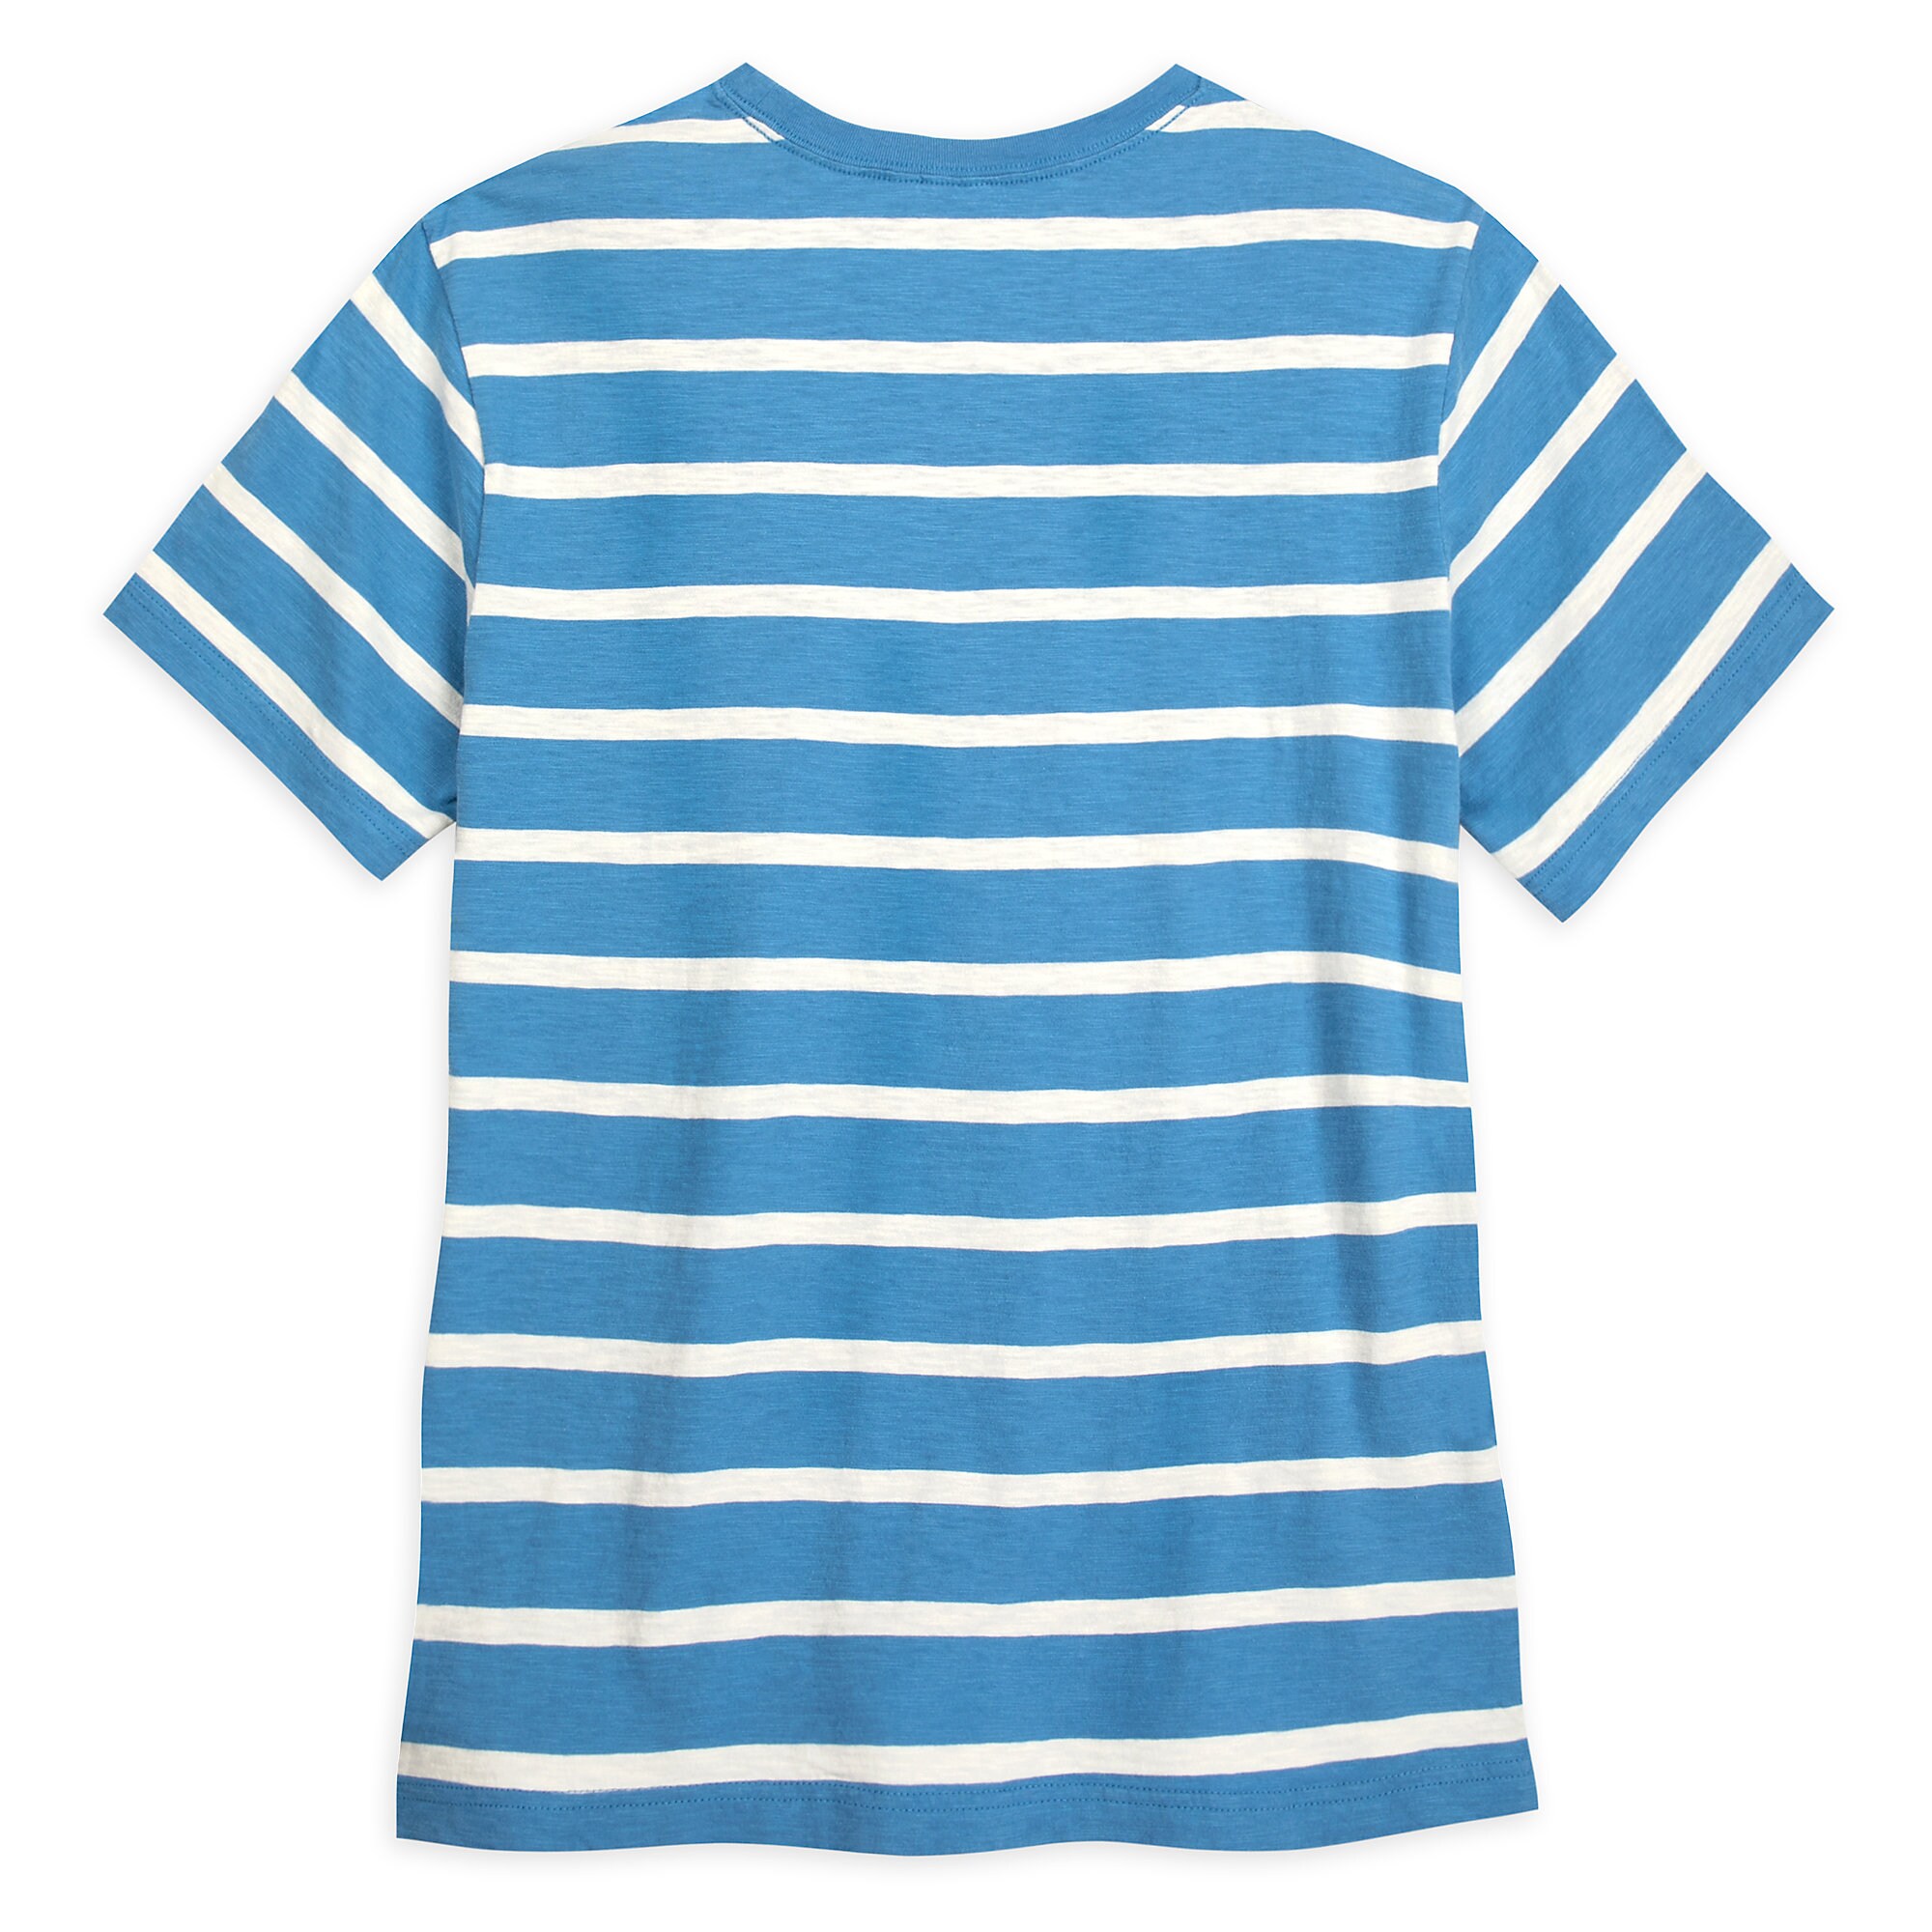 Disneyland Striped Jersey T-Shirt for Men by Junk Food